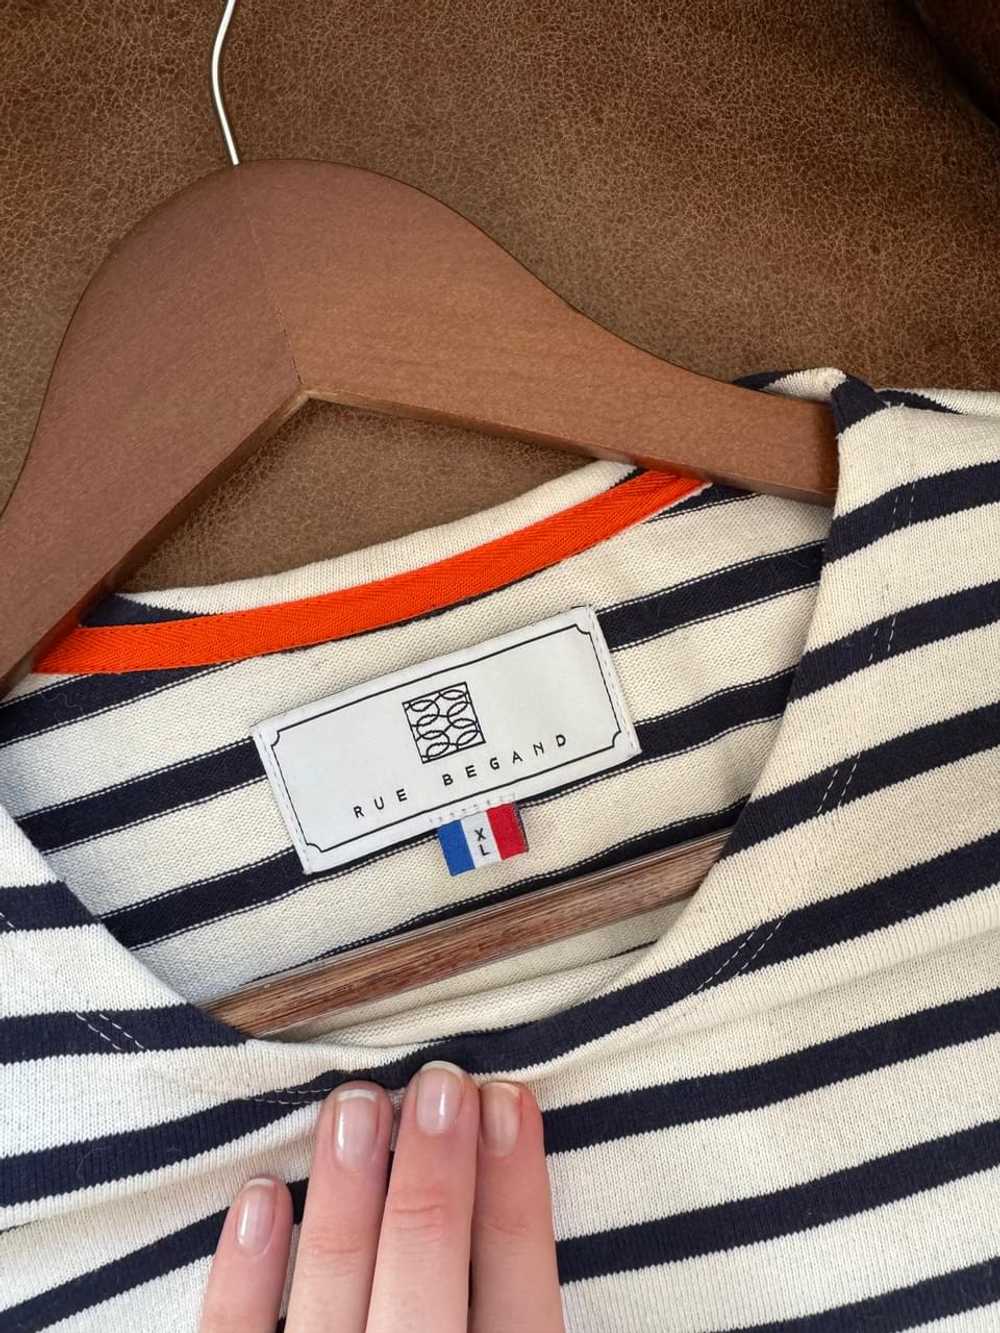 Rue Begand Cotton striped t-shirt (XL) - image 3